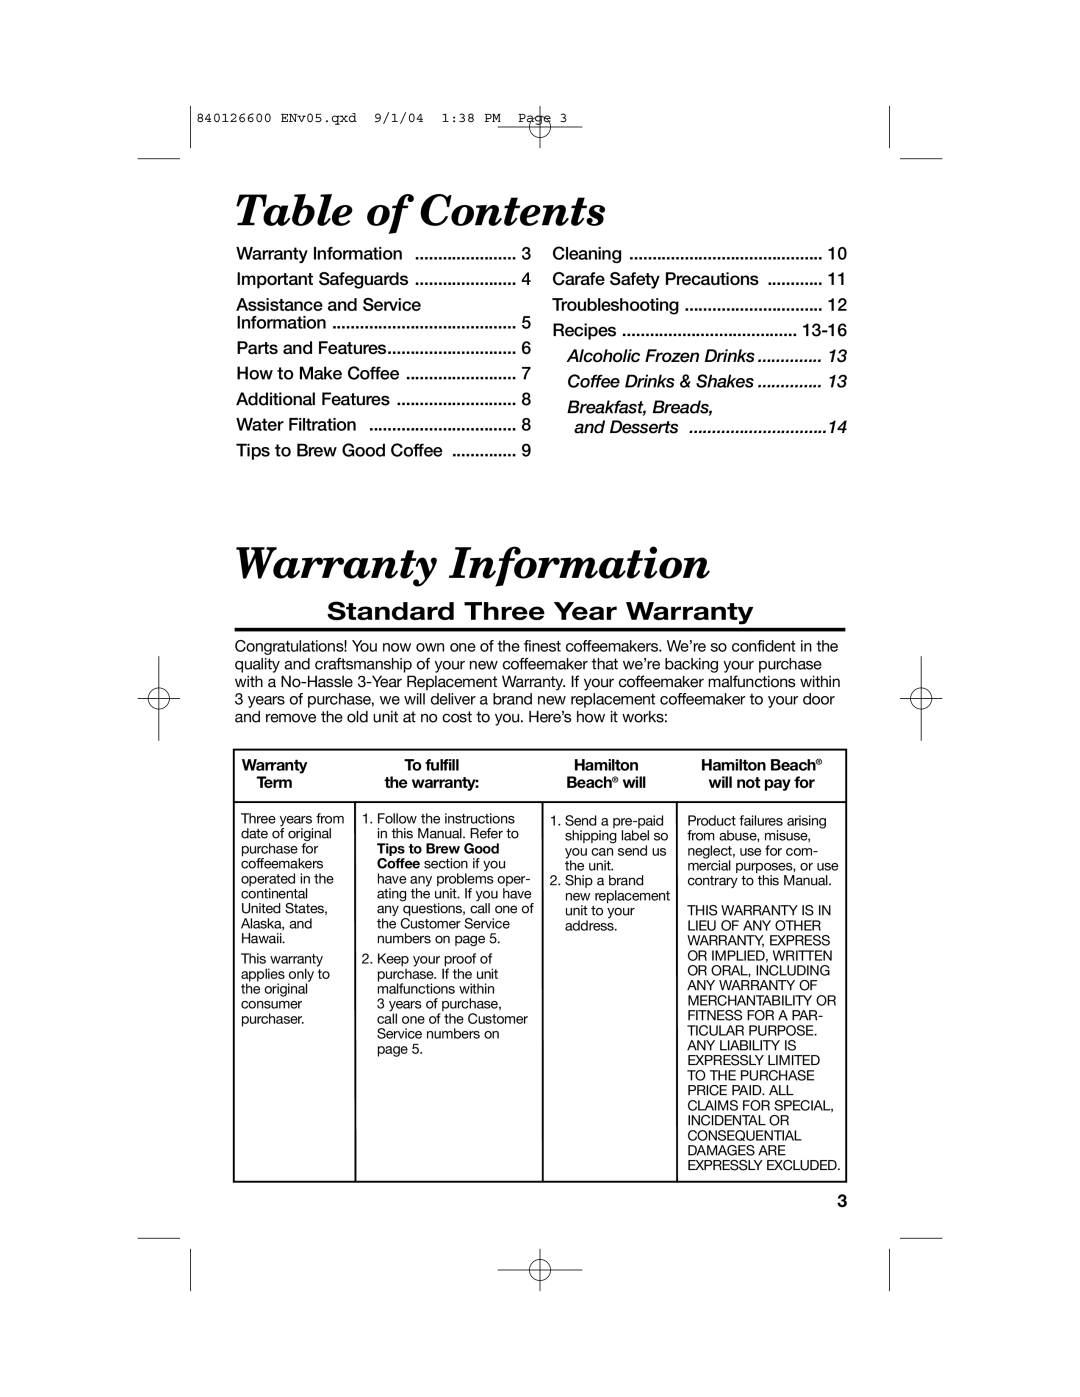 Hamilton Beach 80674 manual Table of Contents, Warranty Information, Standard Three Year Warranty, Breakfast, Breads 